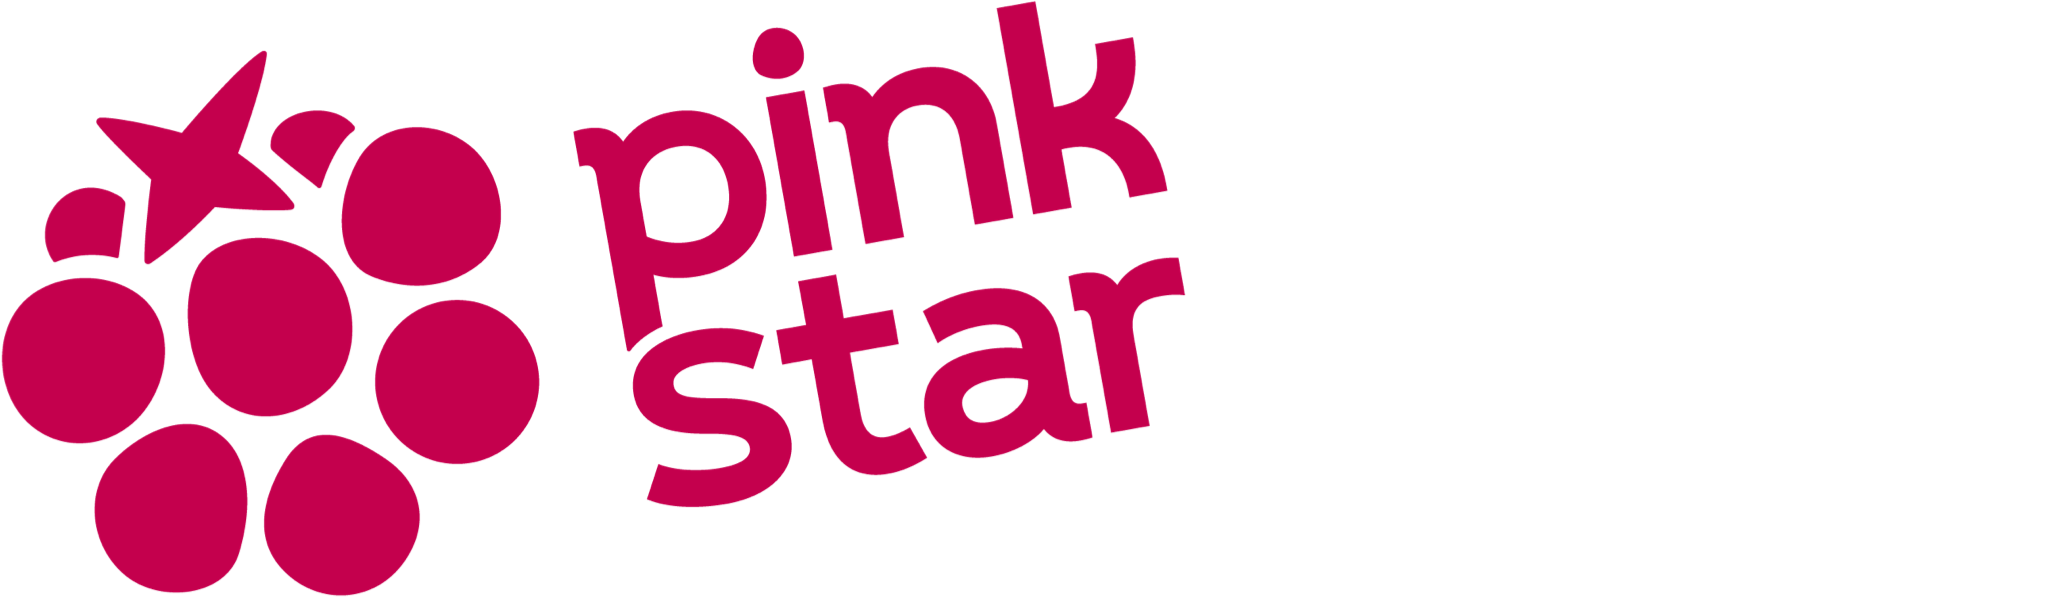 PinkStar Variete logo Marionnet Label